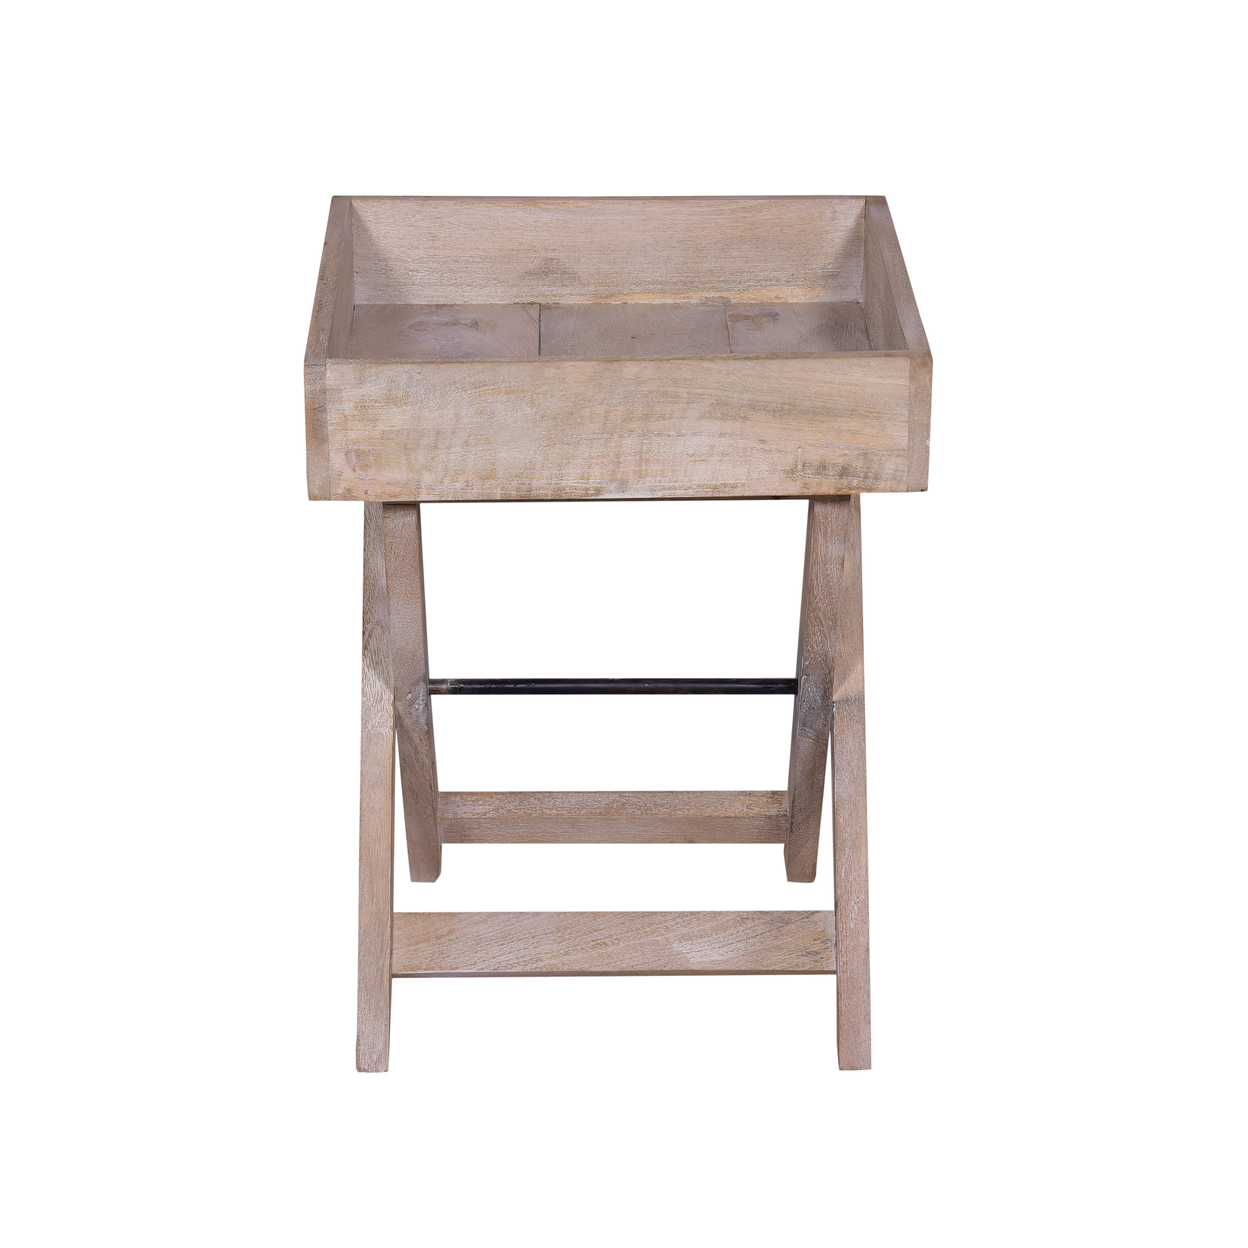 22 Inch Farmhouse Square Tray Top End Table, Mango Wood, X Shape Foldable Frame, Washed White- Saltoro Sherpi